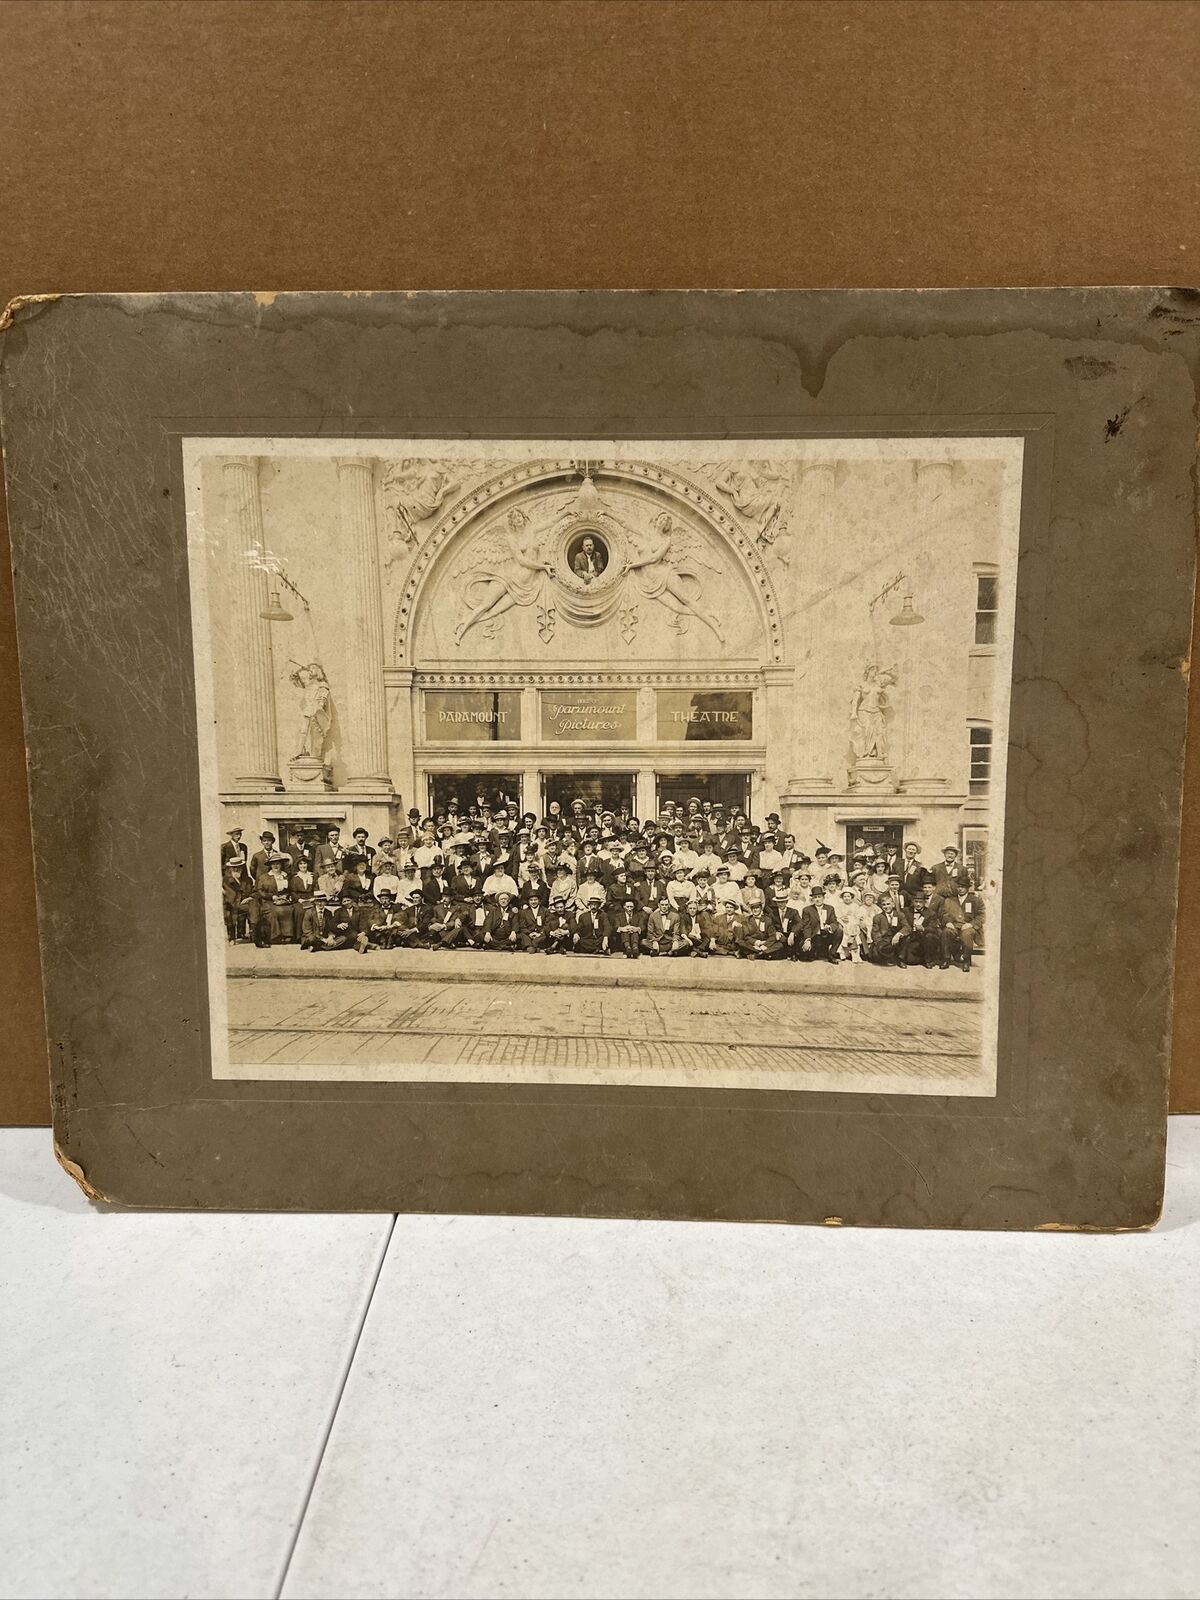 Paramount Theatre Roanoke Virginia Antique Photograph Large Cabinet Card 1915